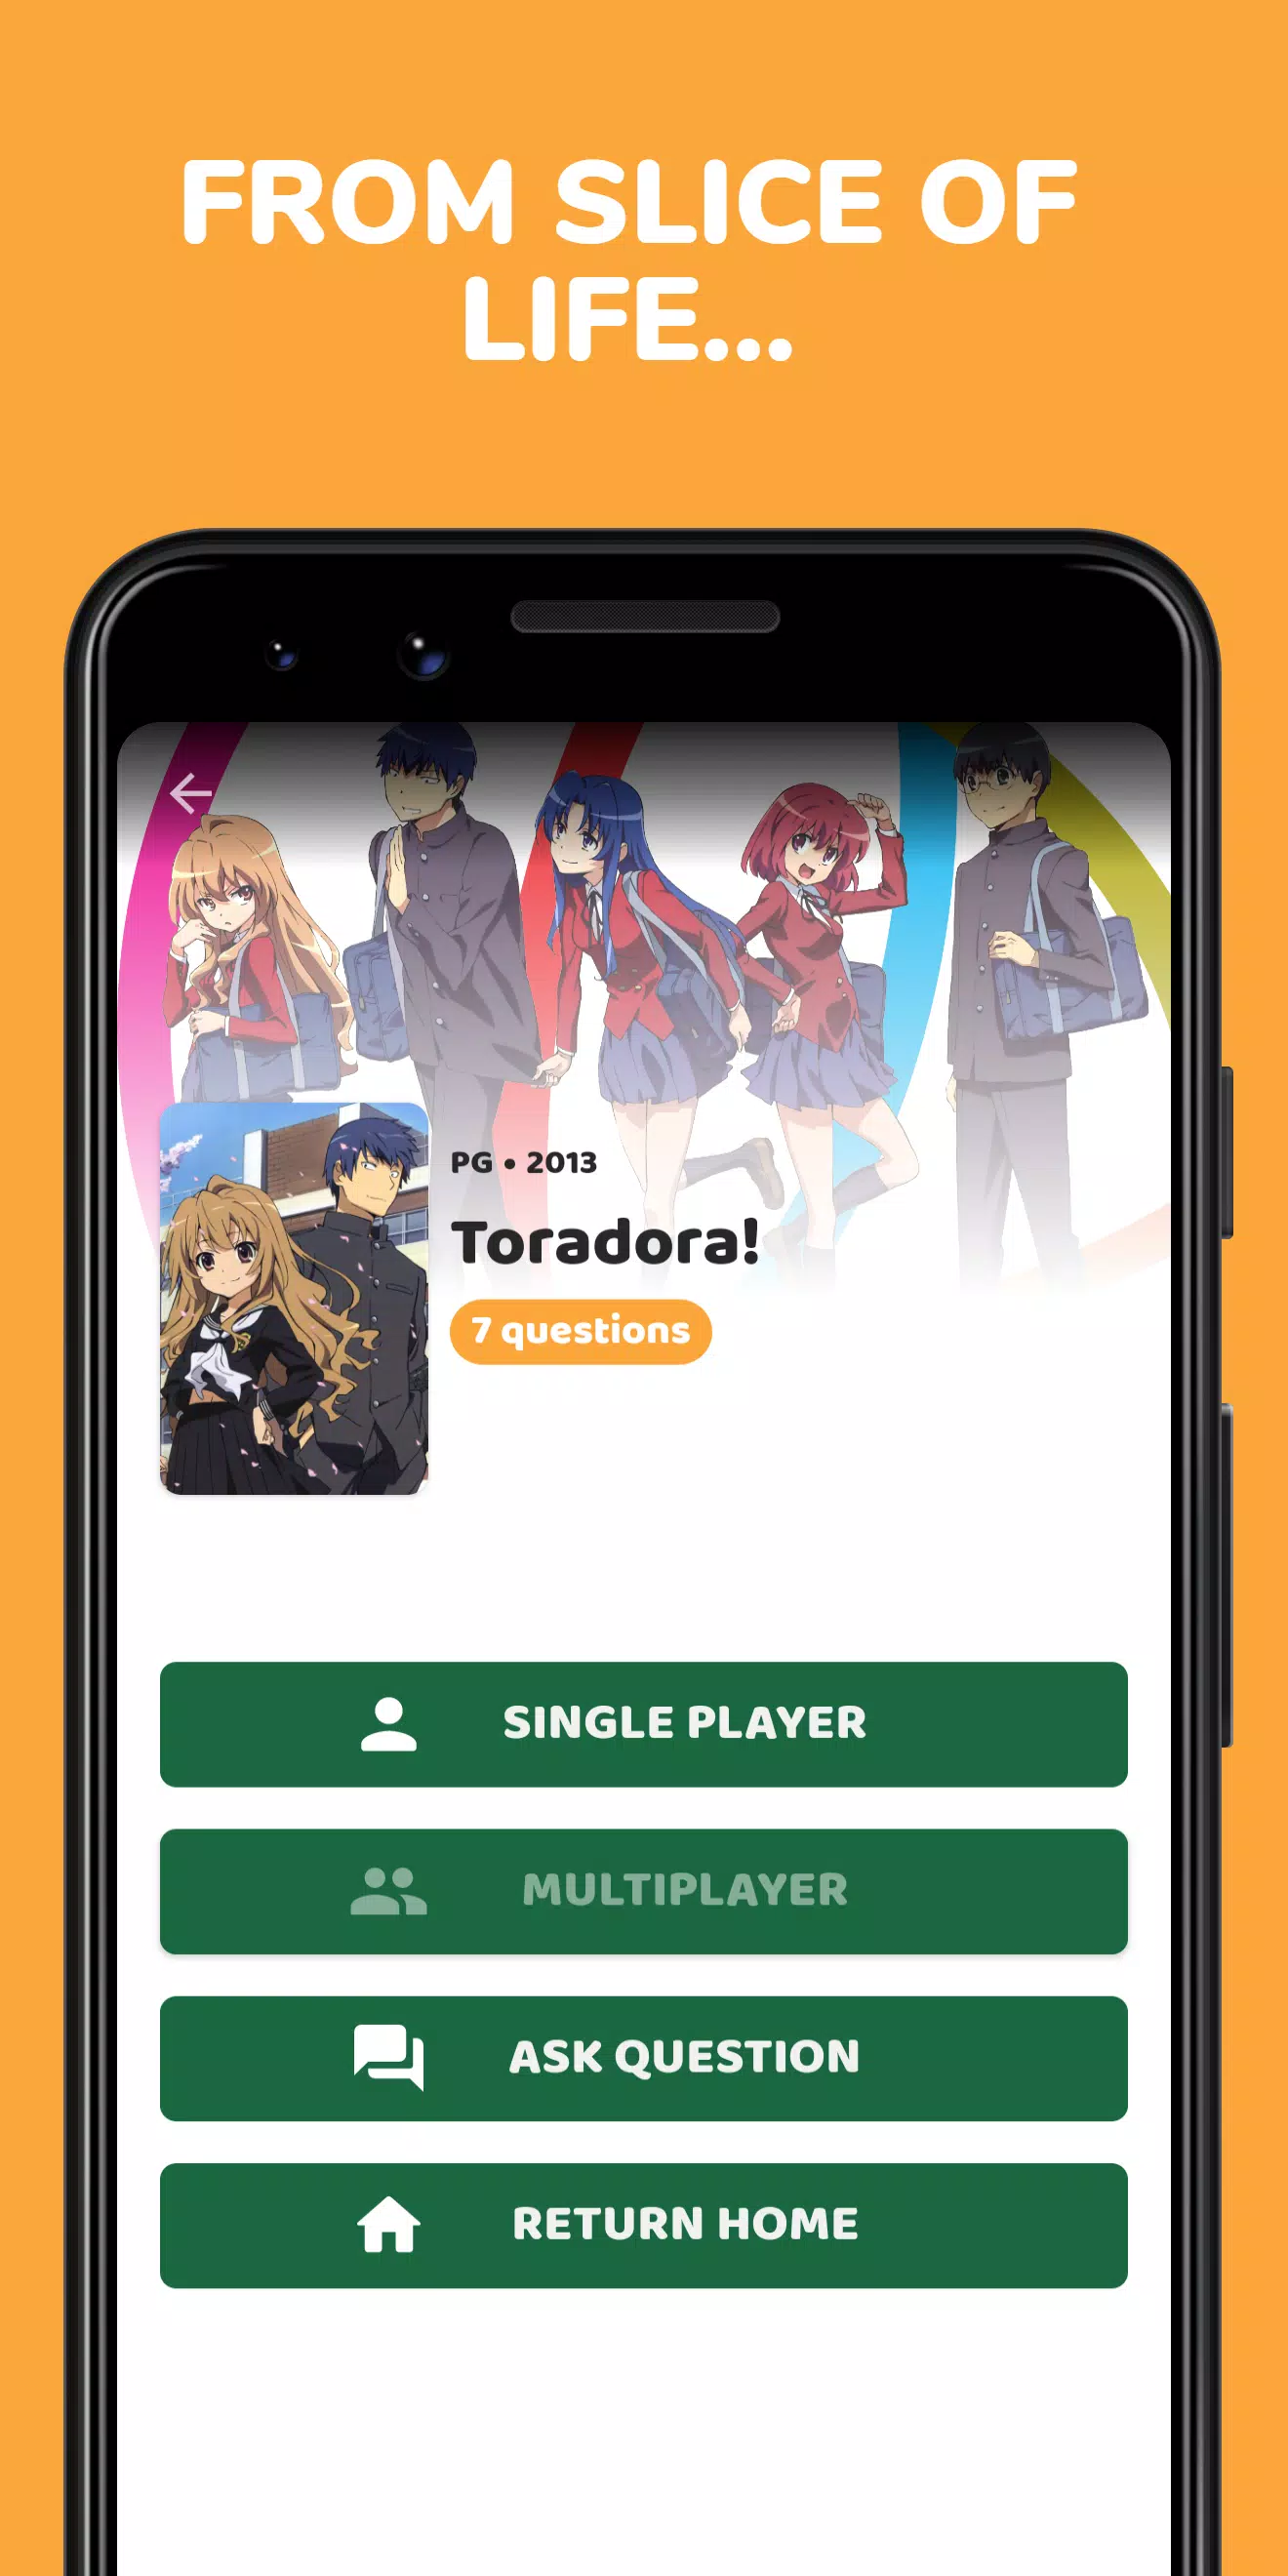 Anime King: Official Anime Tri APK (Android Game) - Baixar Grátis